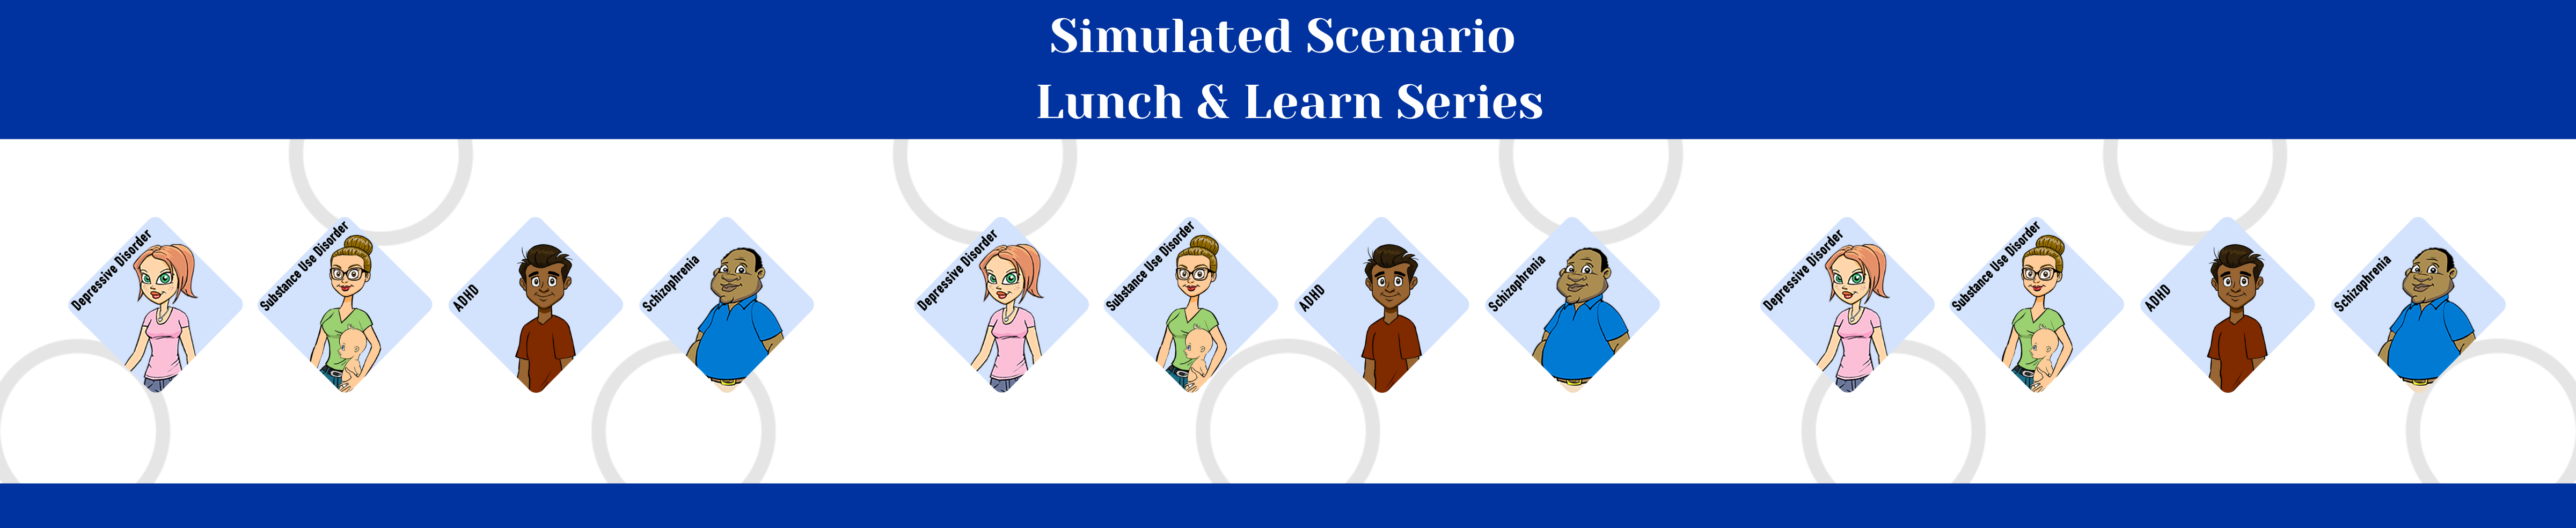 Simulated Scenario Lunch & Learn Series